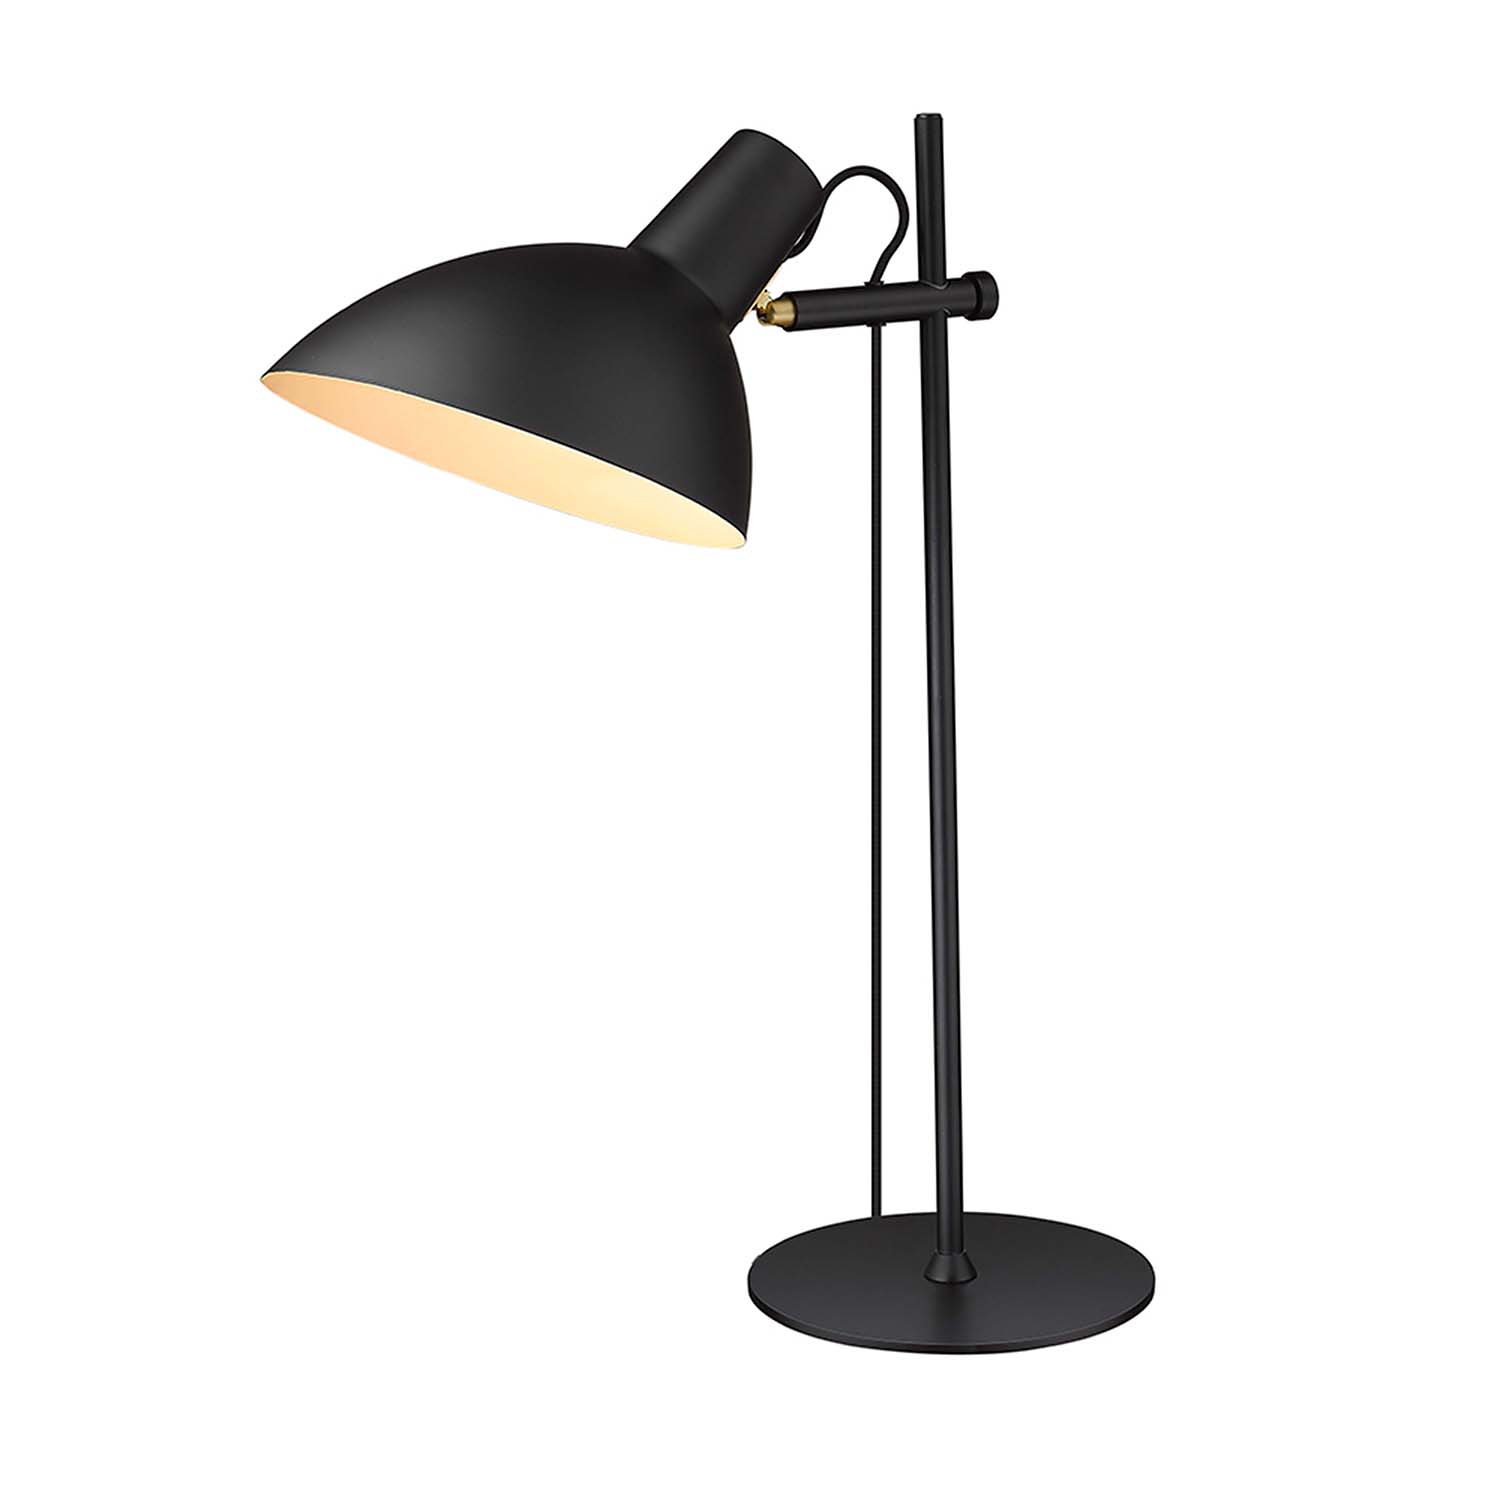 METROPOLE - Adjustable table lamp in black metal or brass